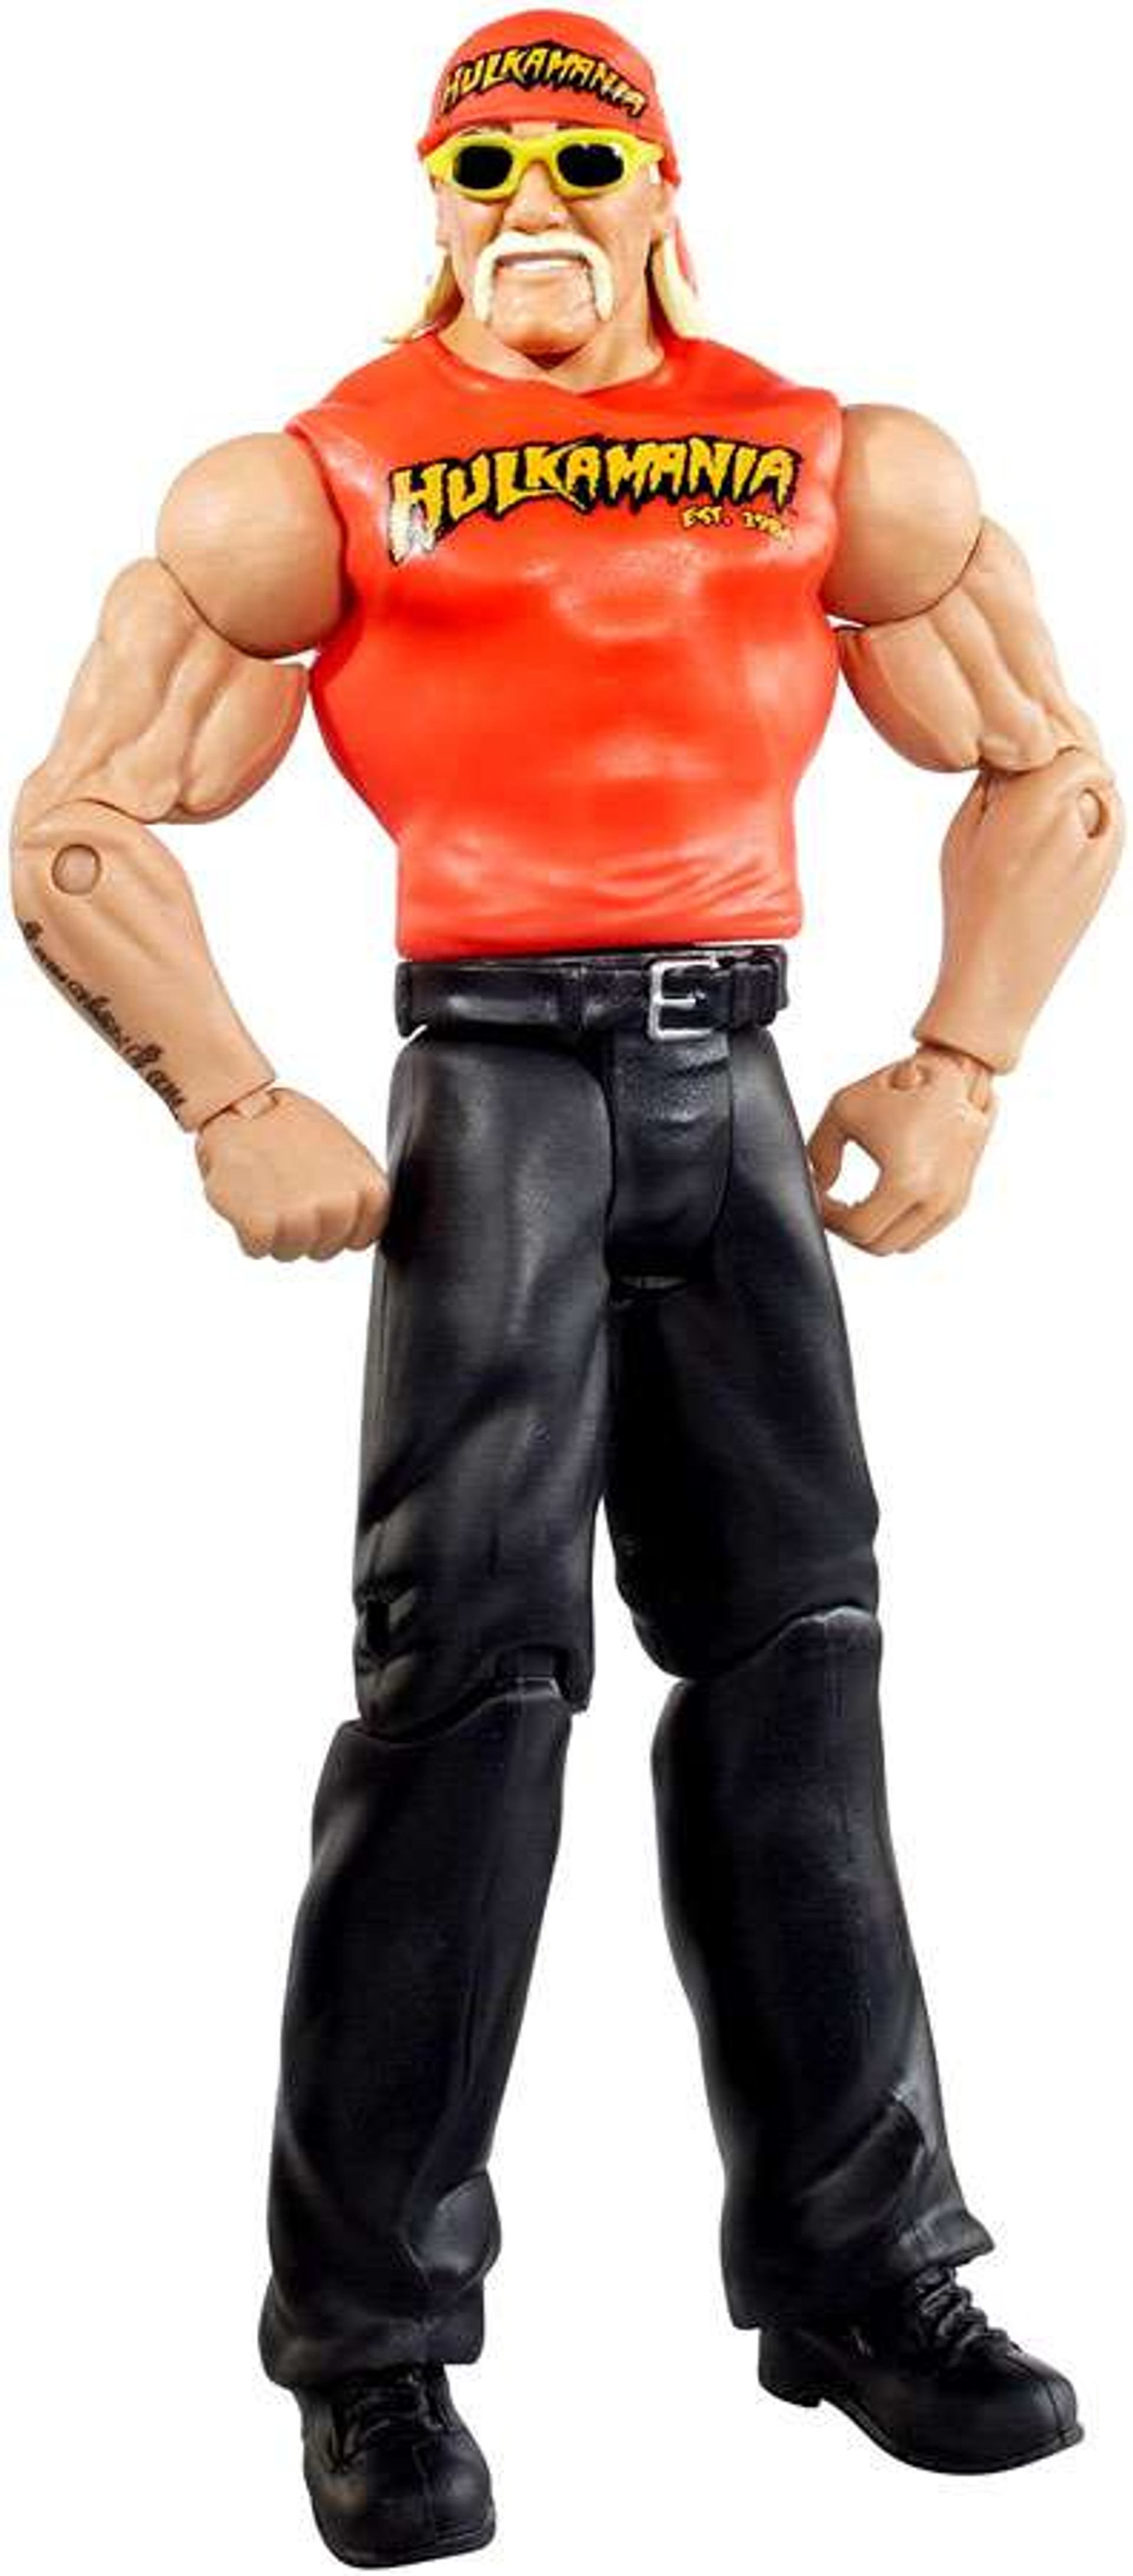 Wwe Wrestling Signature Series 2015 Hulk Hogan Action Figure Mattel